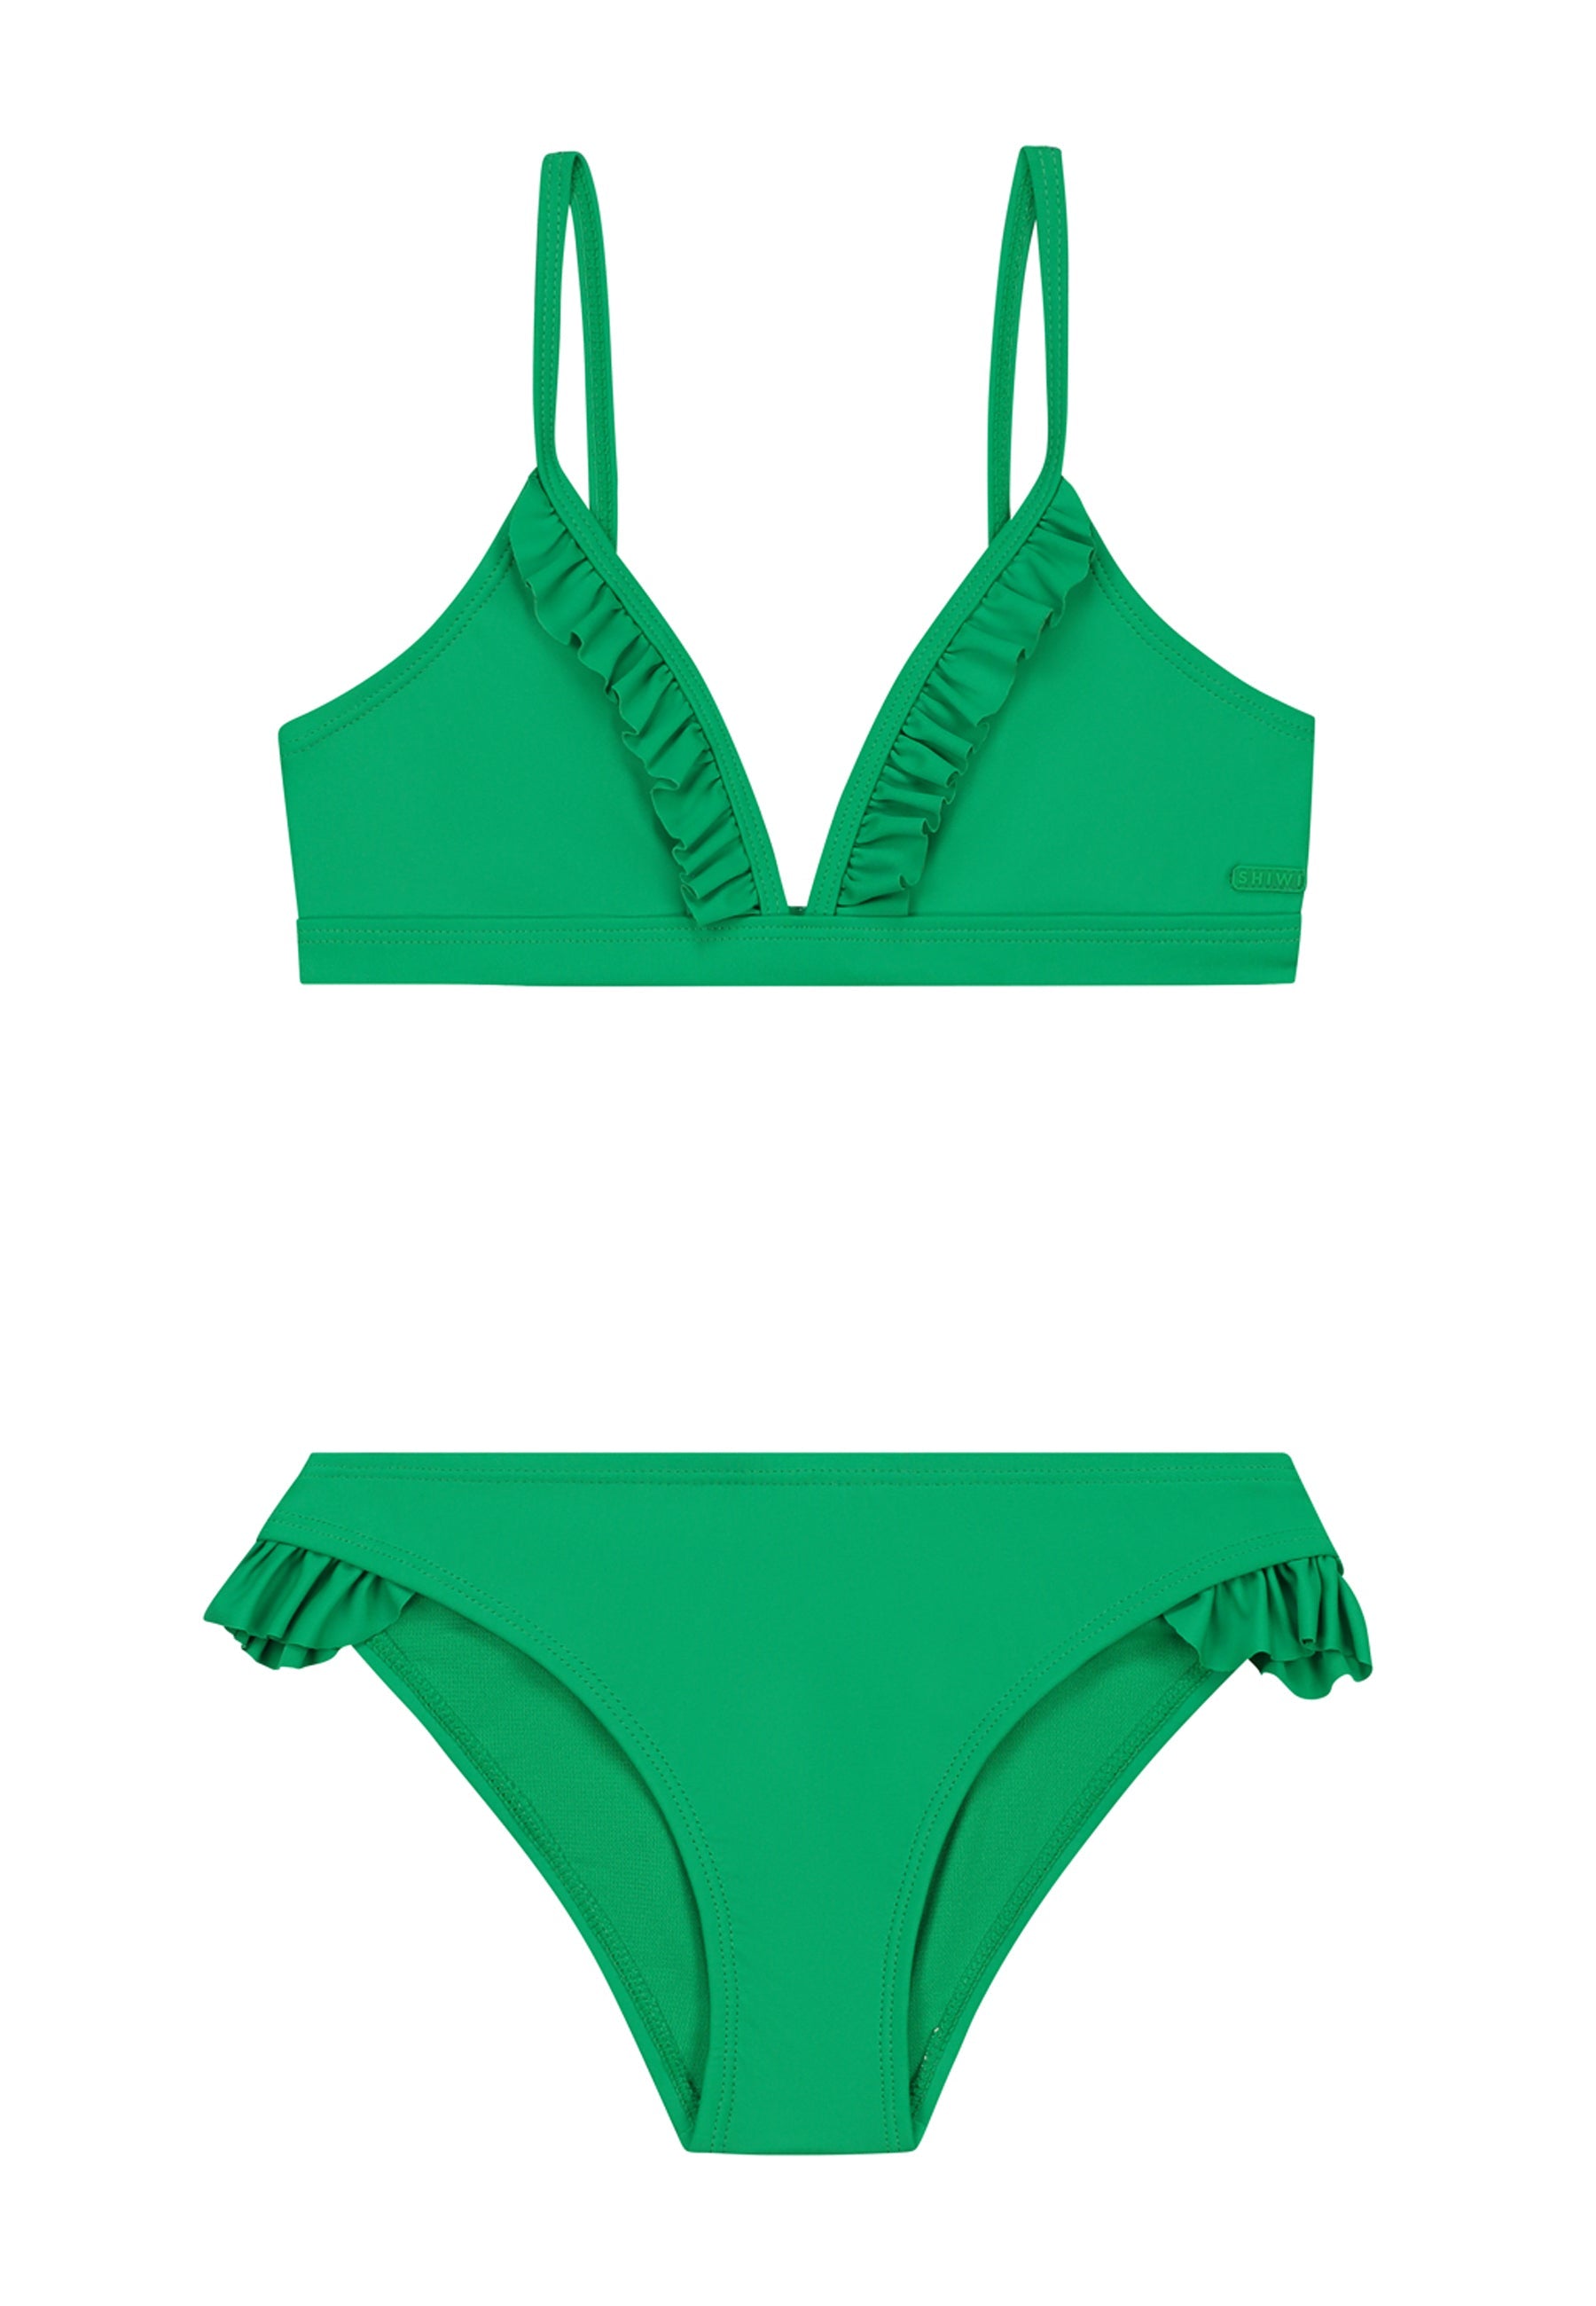 Meisjes BLAKE bikini set van Shiwi in de kleur tropic green in maat 170-176.